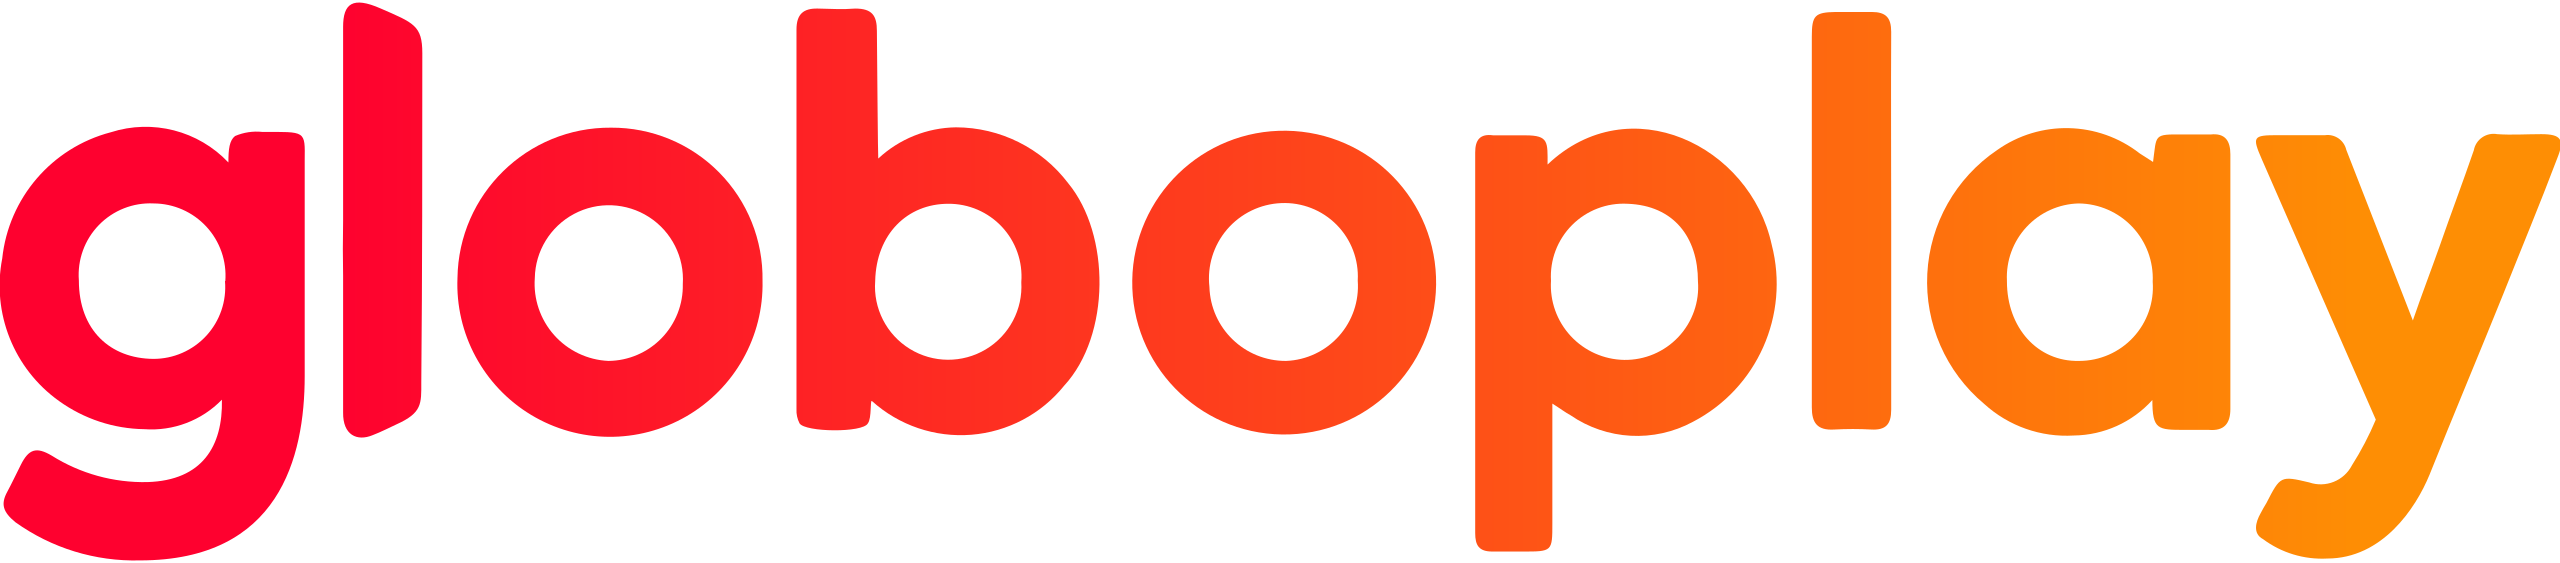 logo globoplay